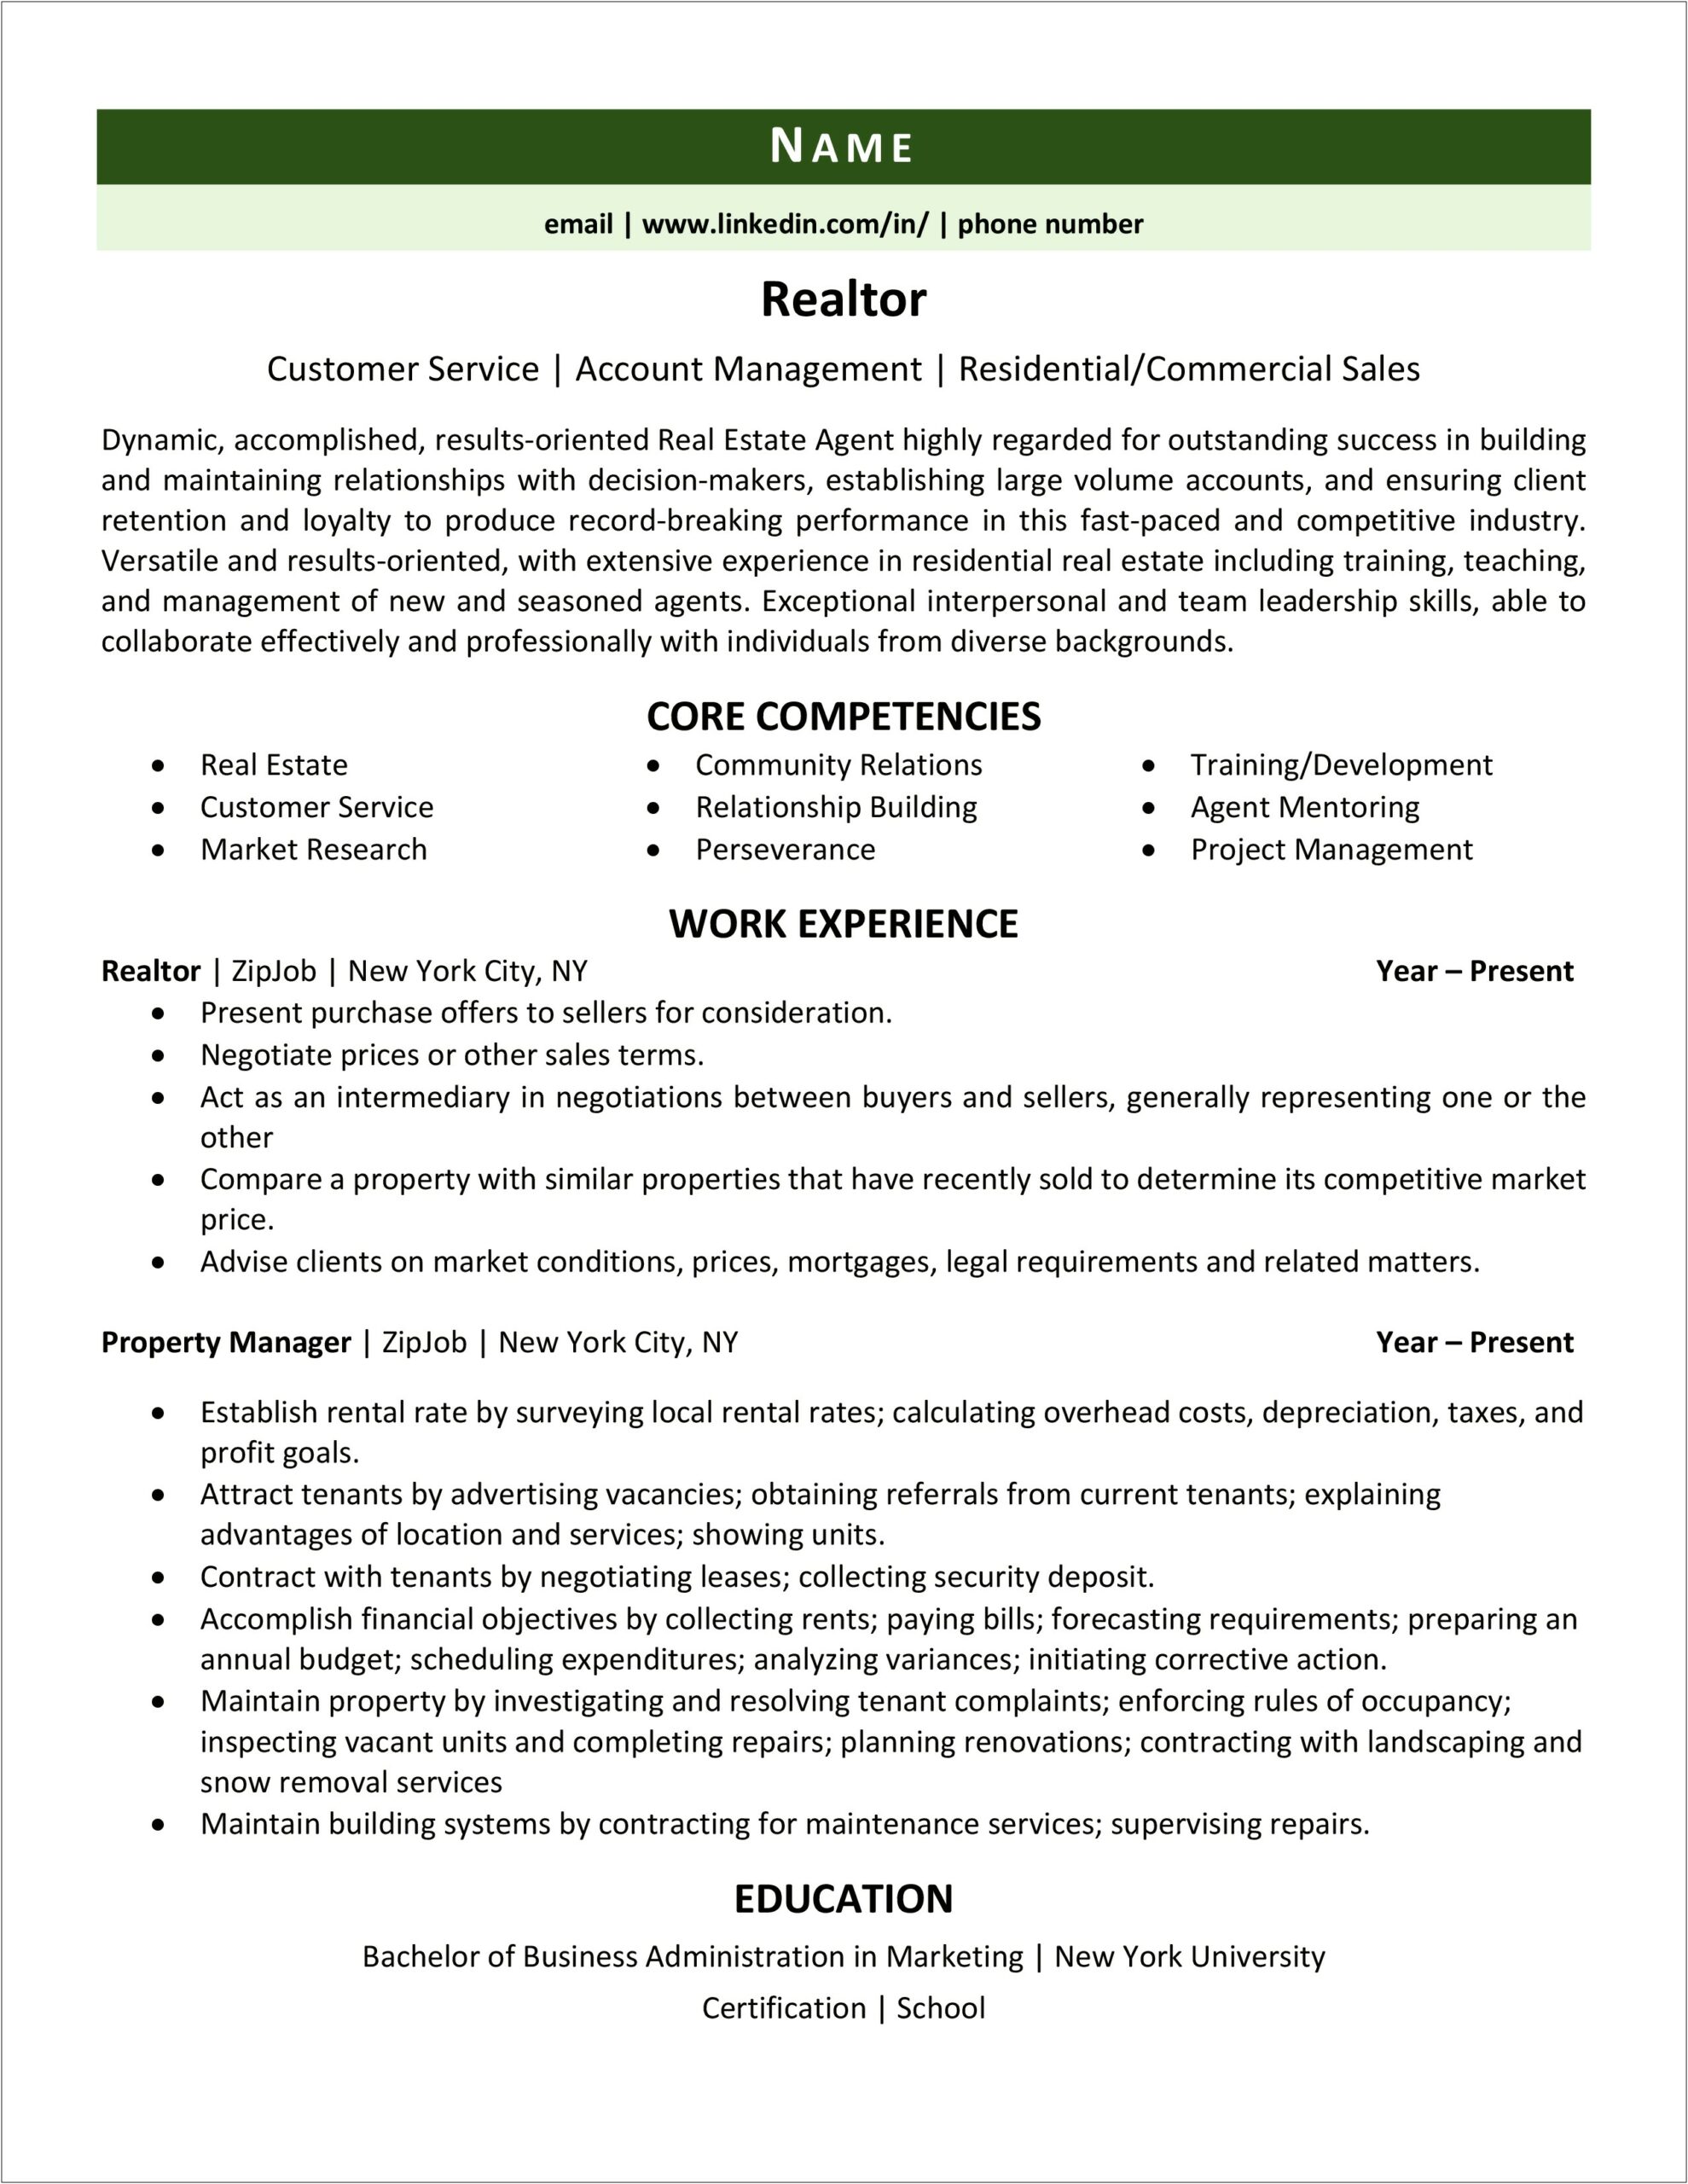 Job Description Of Realtor For Resume